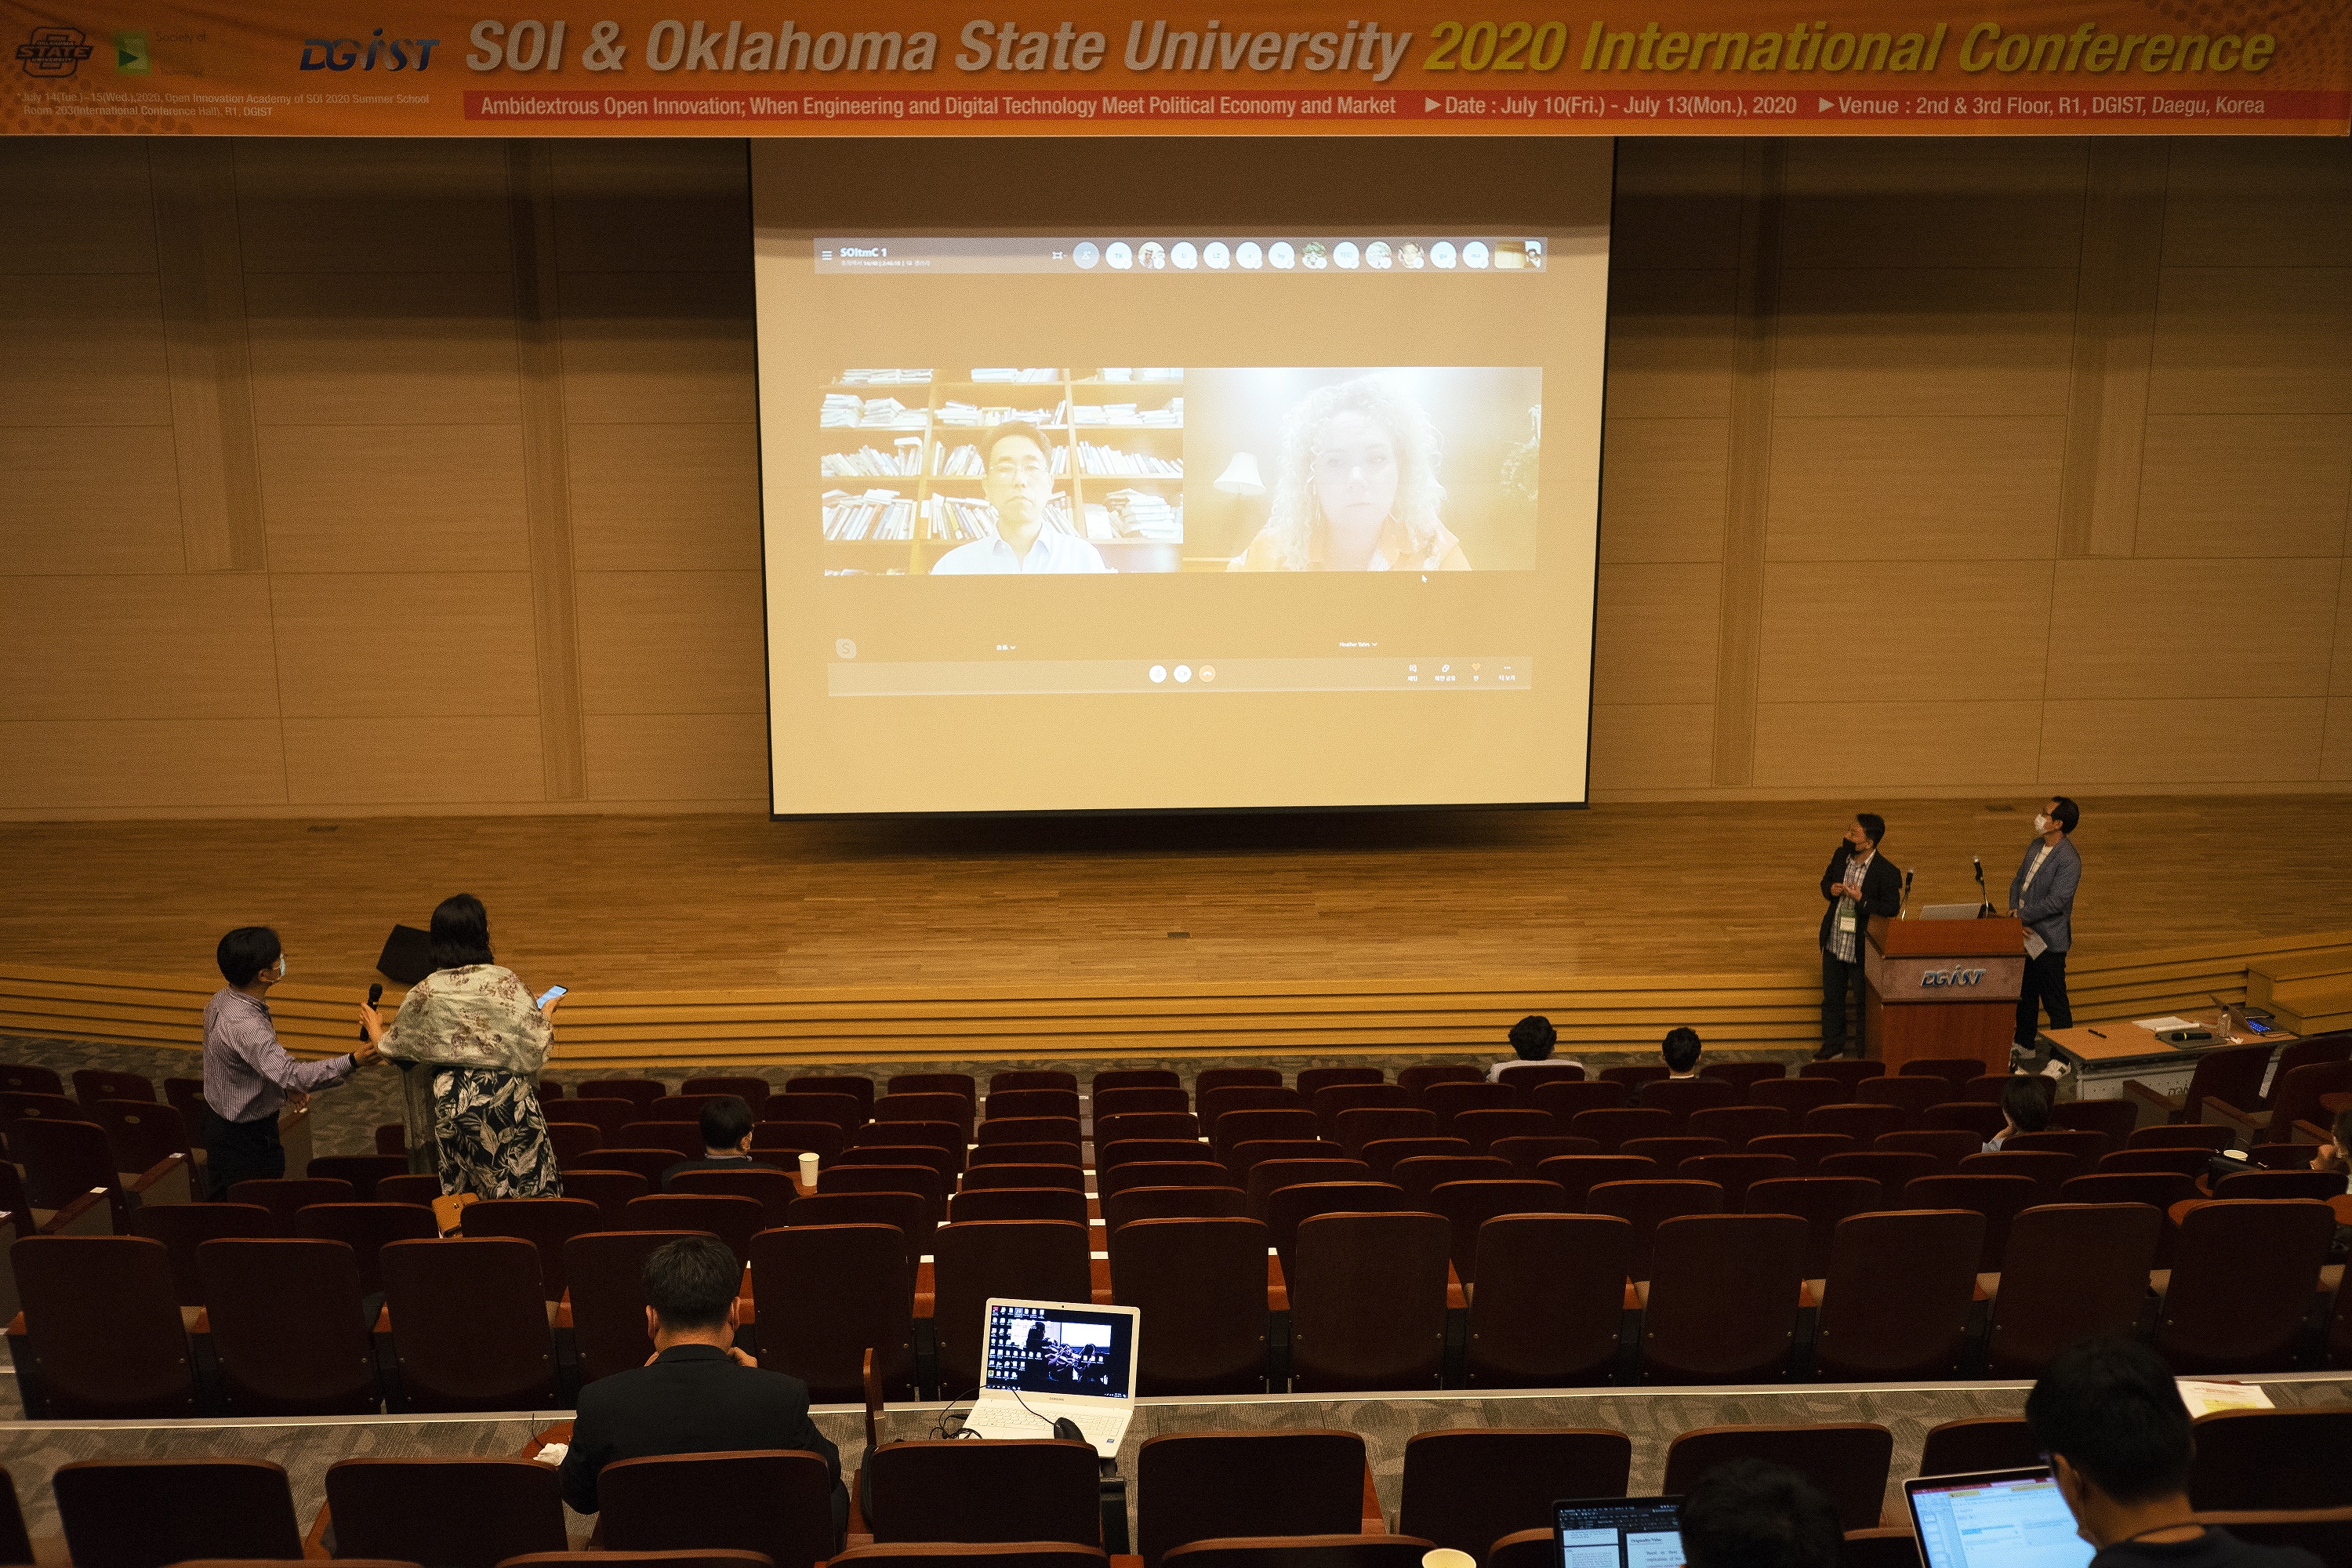 SOI & Oklahoma State Univ. 2020 Conference